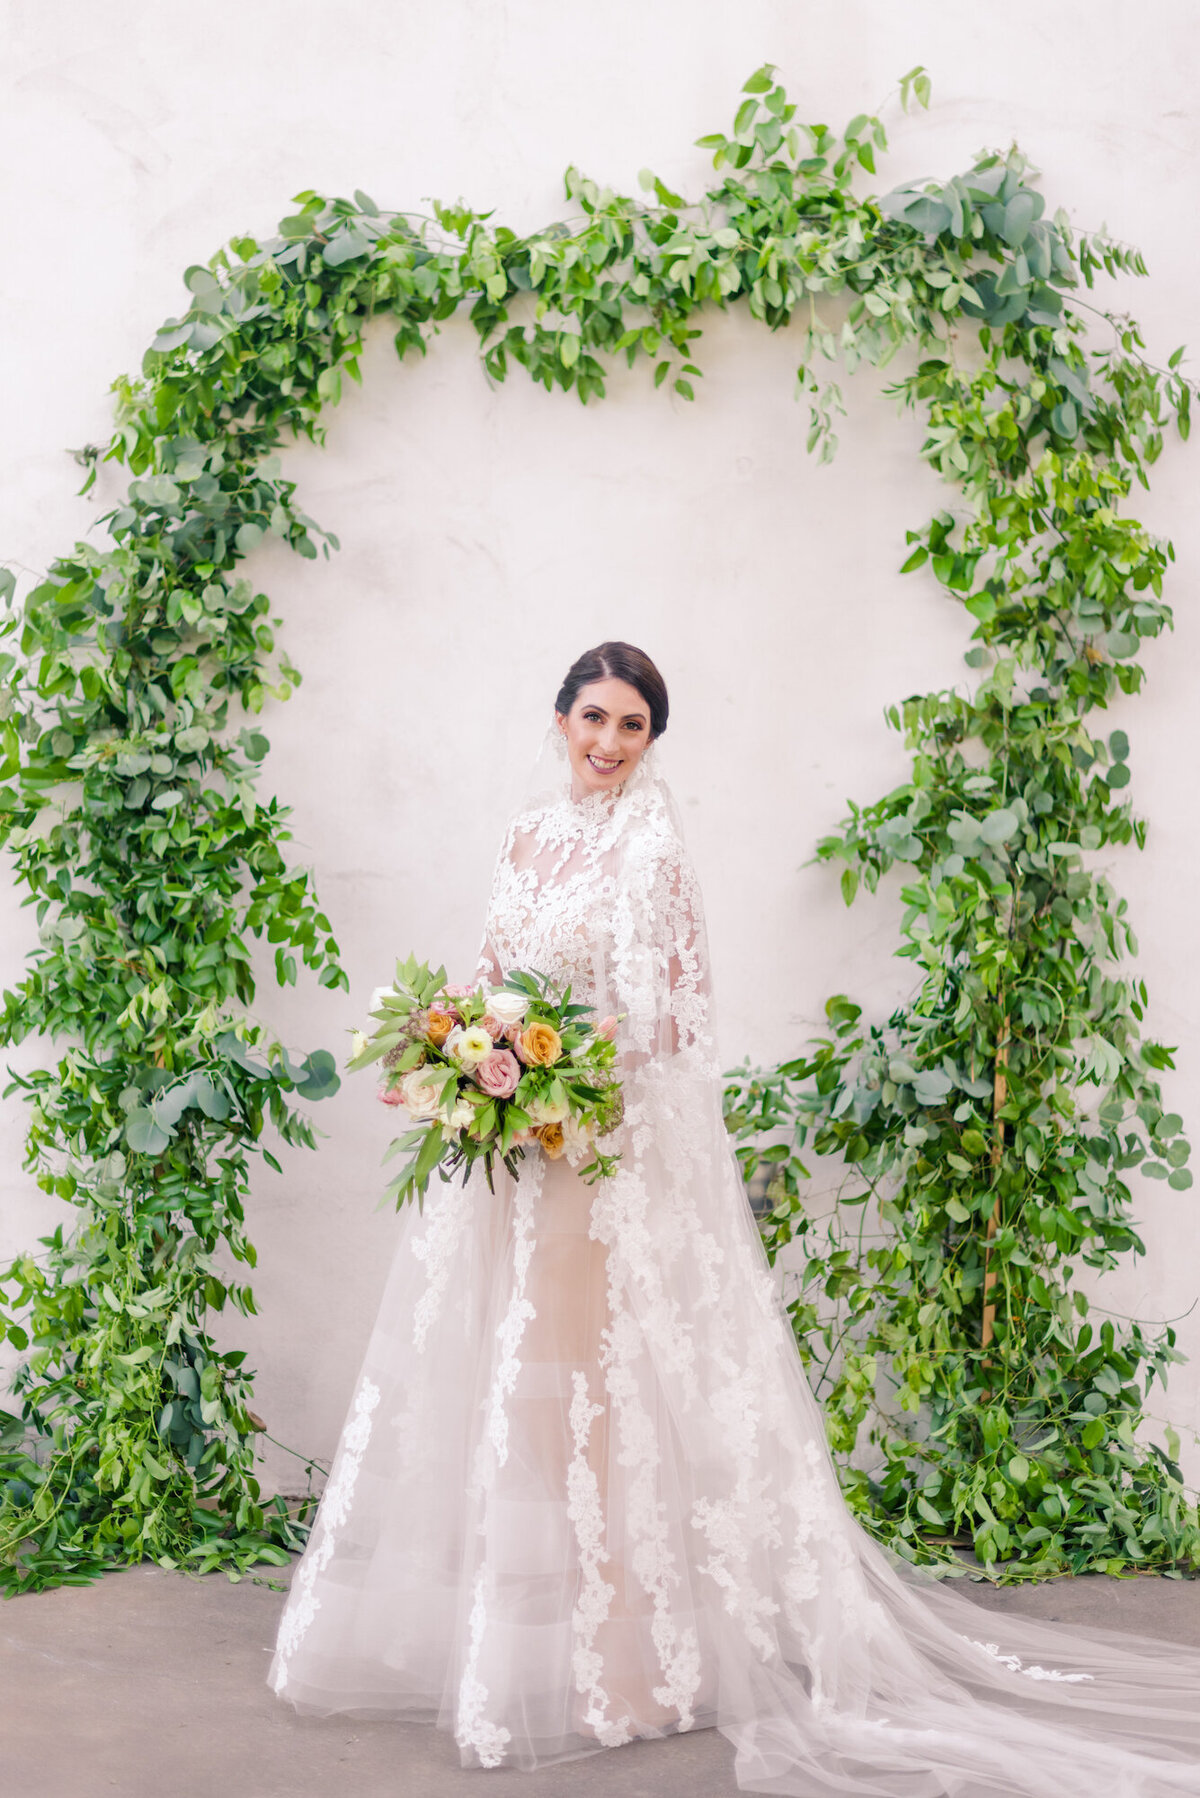 Bride under greenery arch